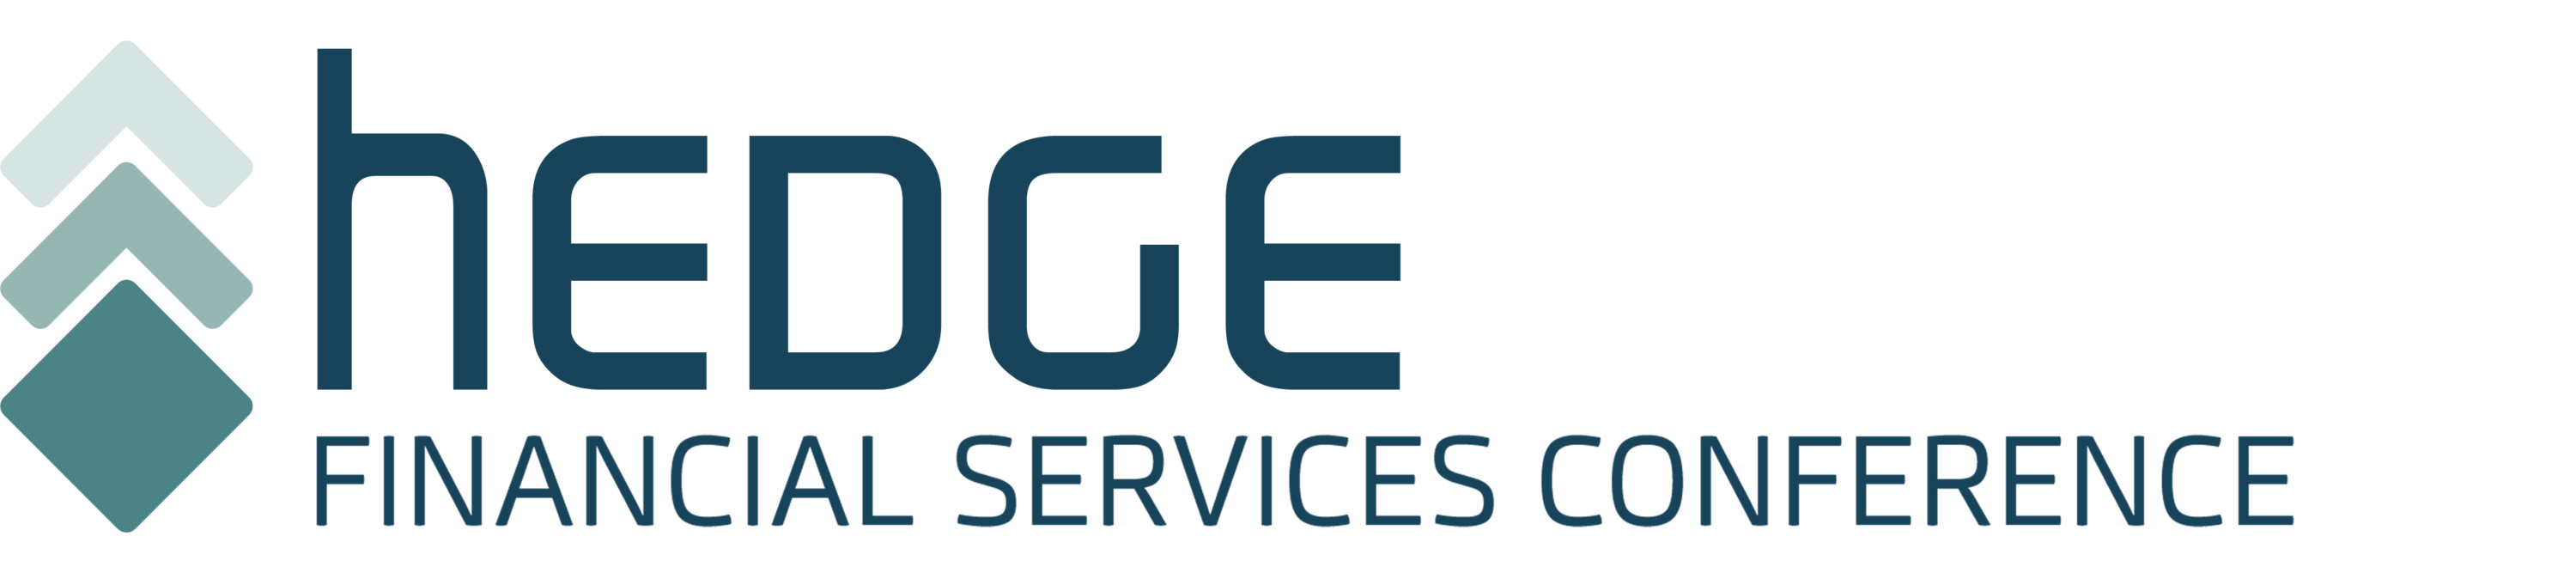 hedge logo